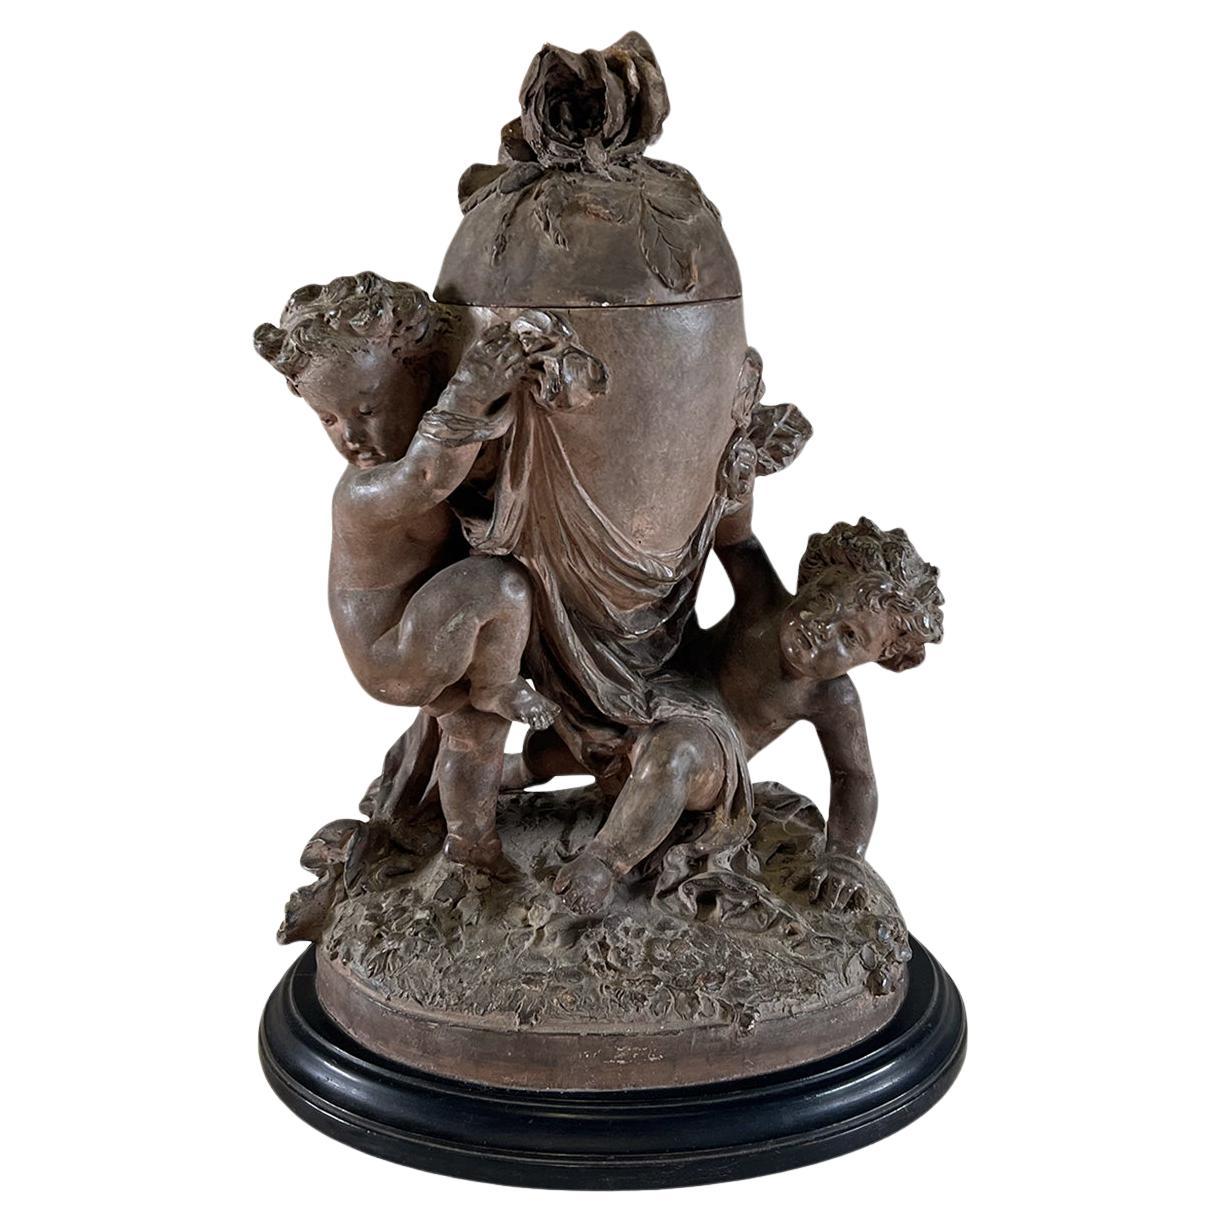 19th Century French Antique Terra Cotta Cherub Figurine Statuette Objet d’Art  For Sale